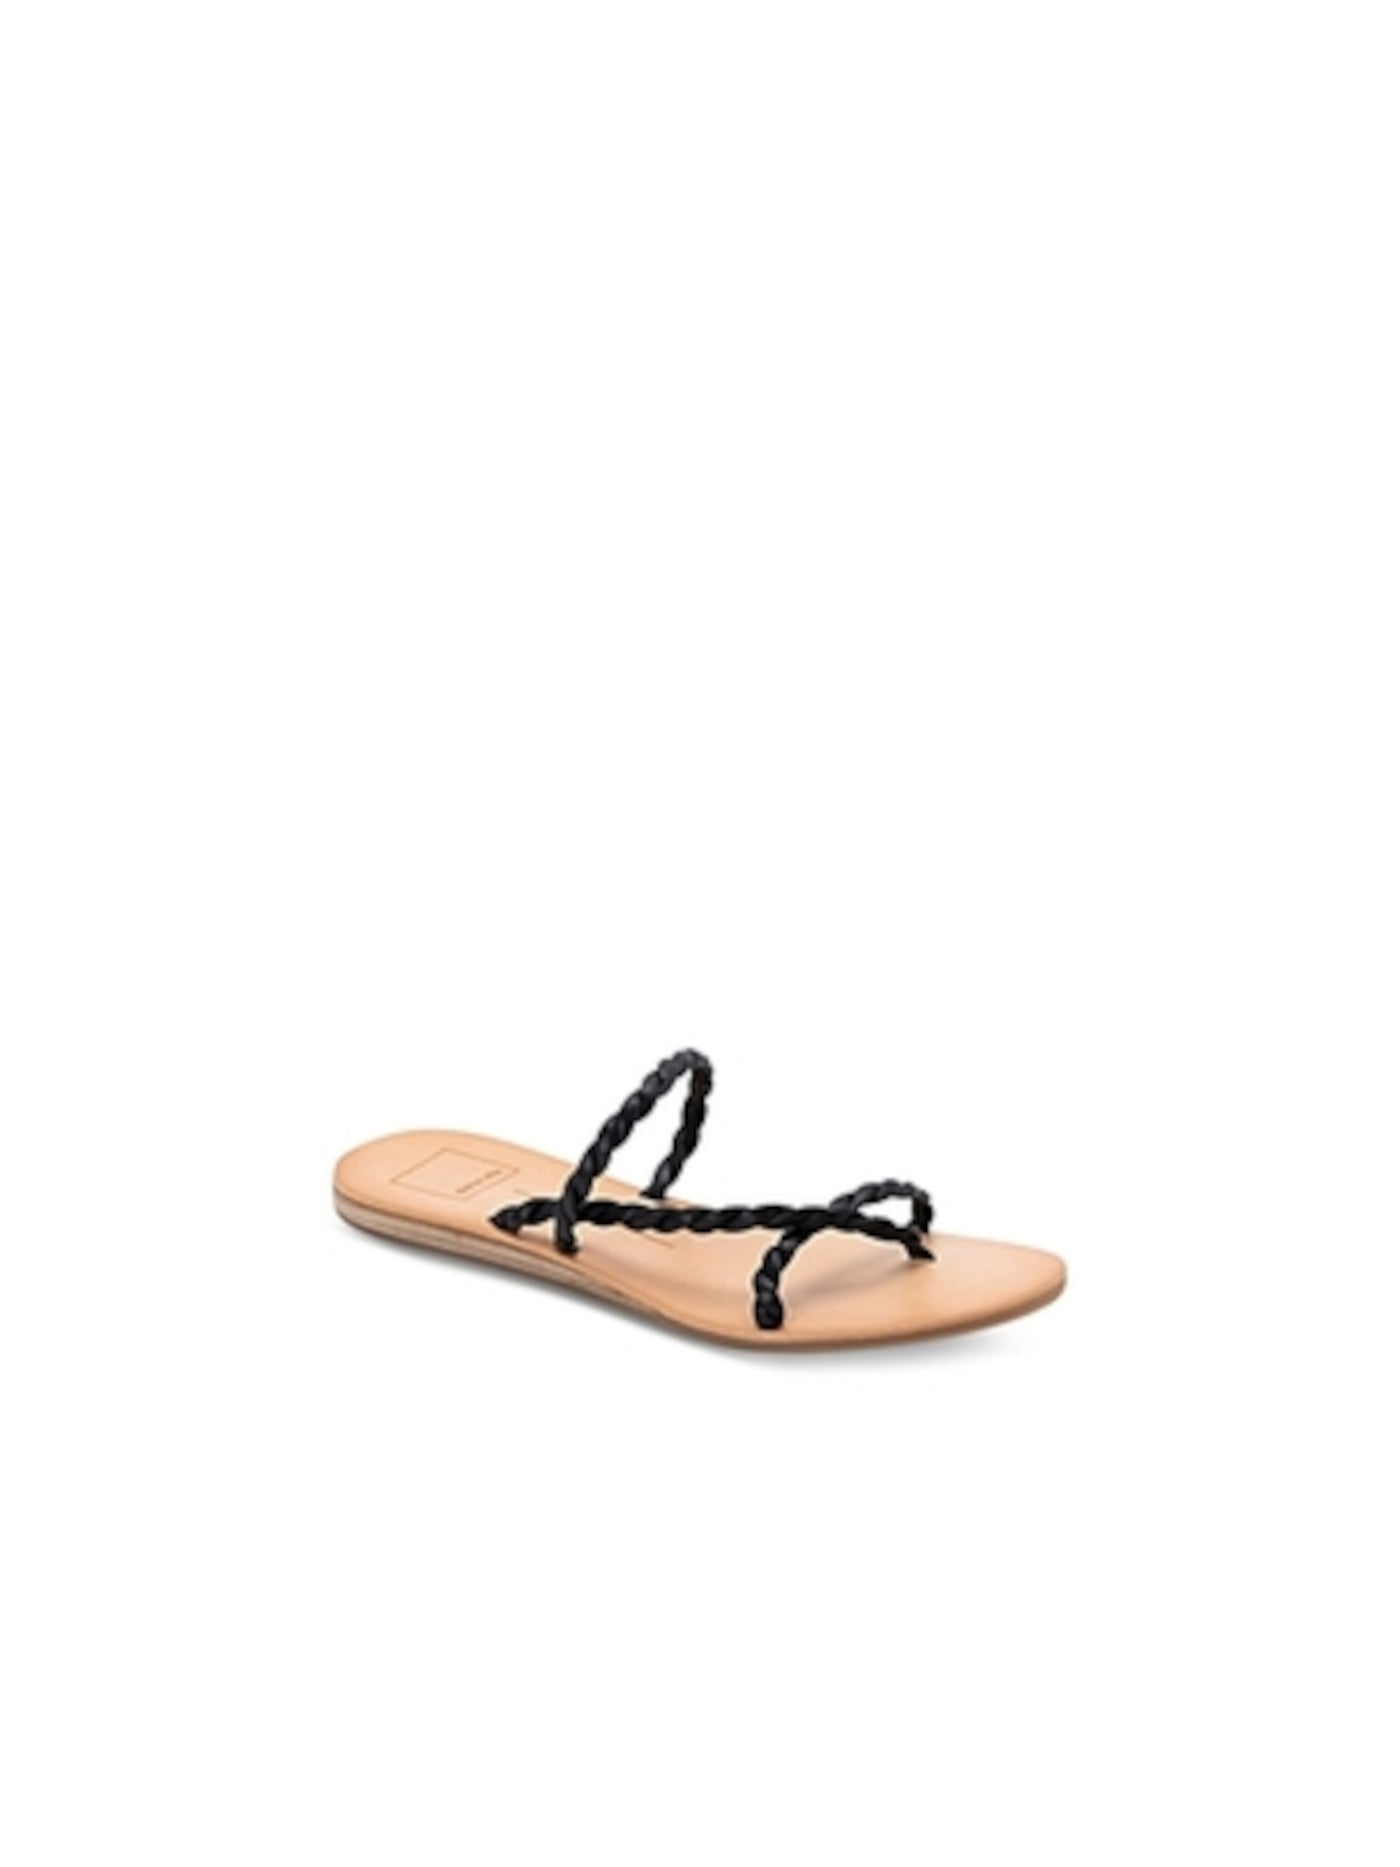 DOLCE VITA Womens Black Braided Dexla Open Toe Sculpted Heel Slip On Thong Sandals 9 M